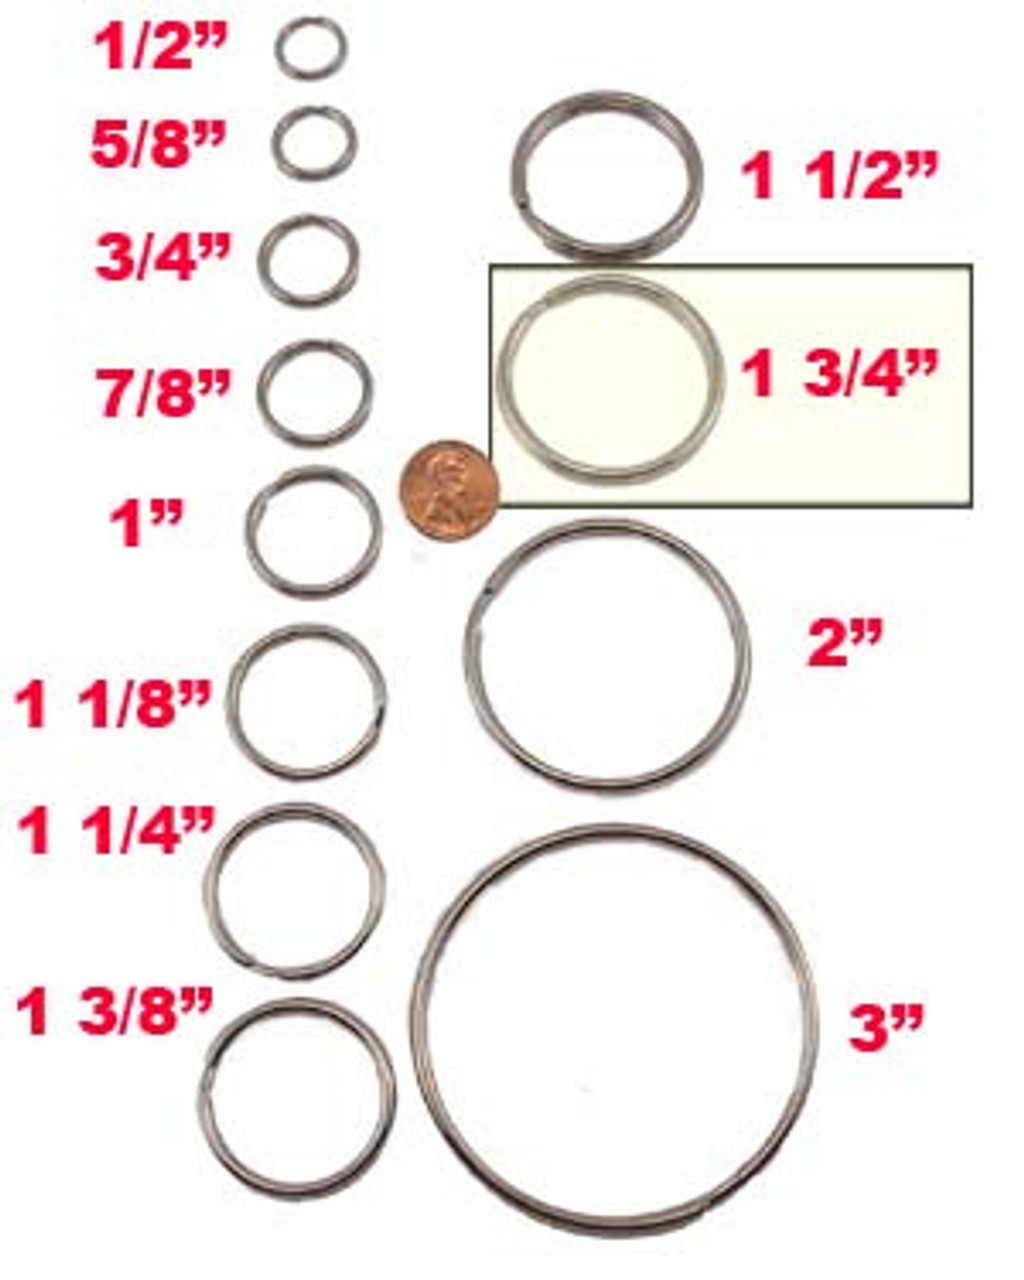 Plain Wire Key Ring 3/4 Inch-Bulk Pack of 1000